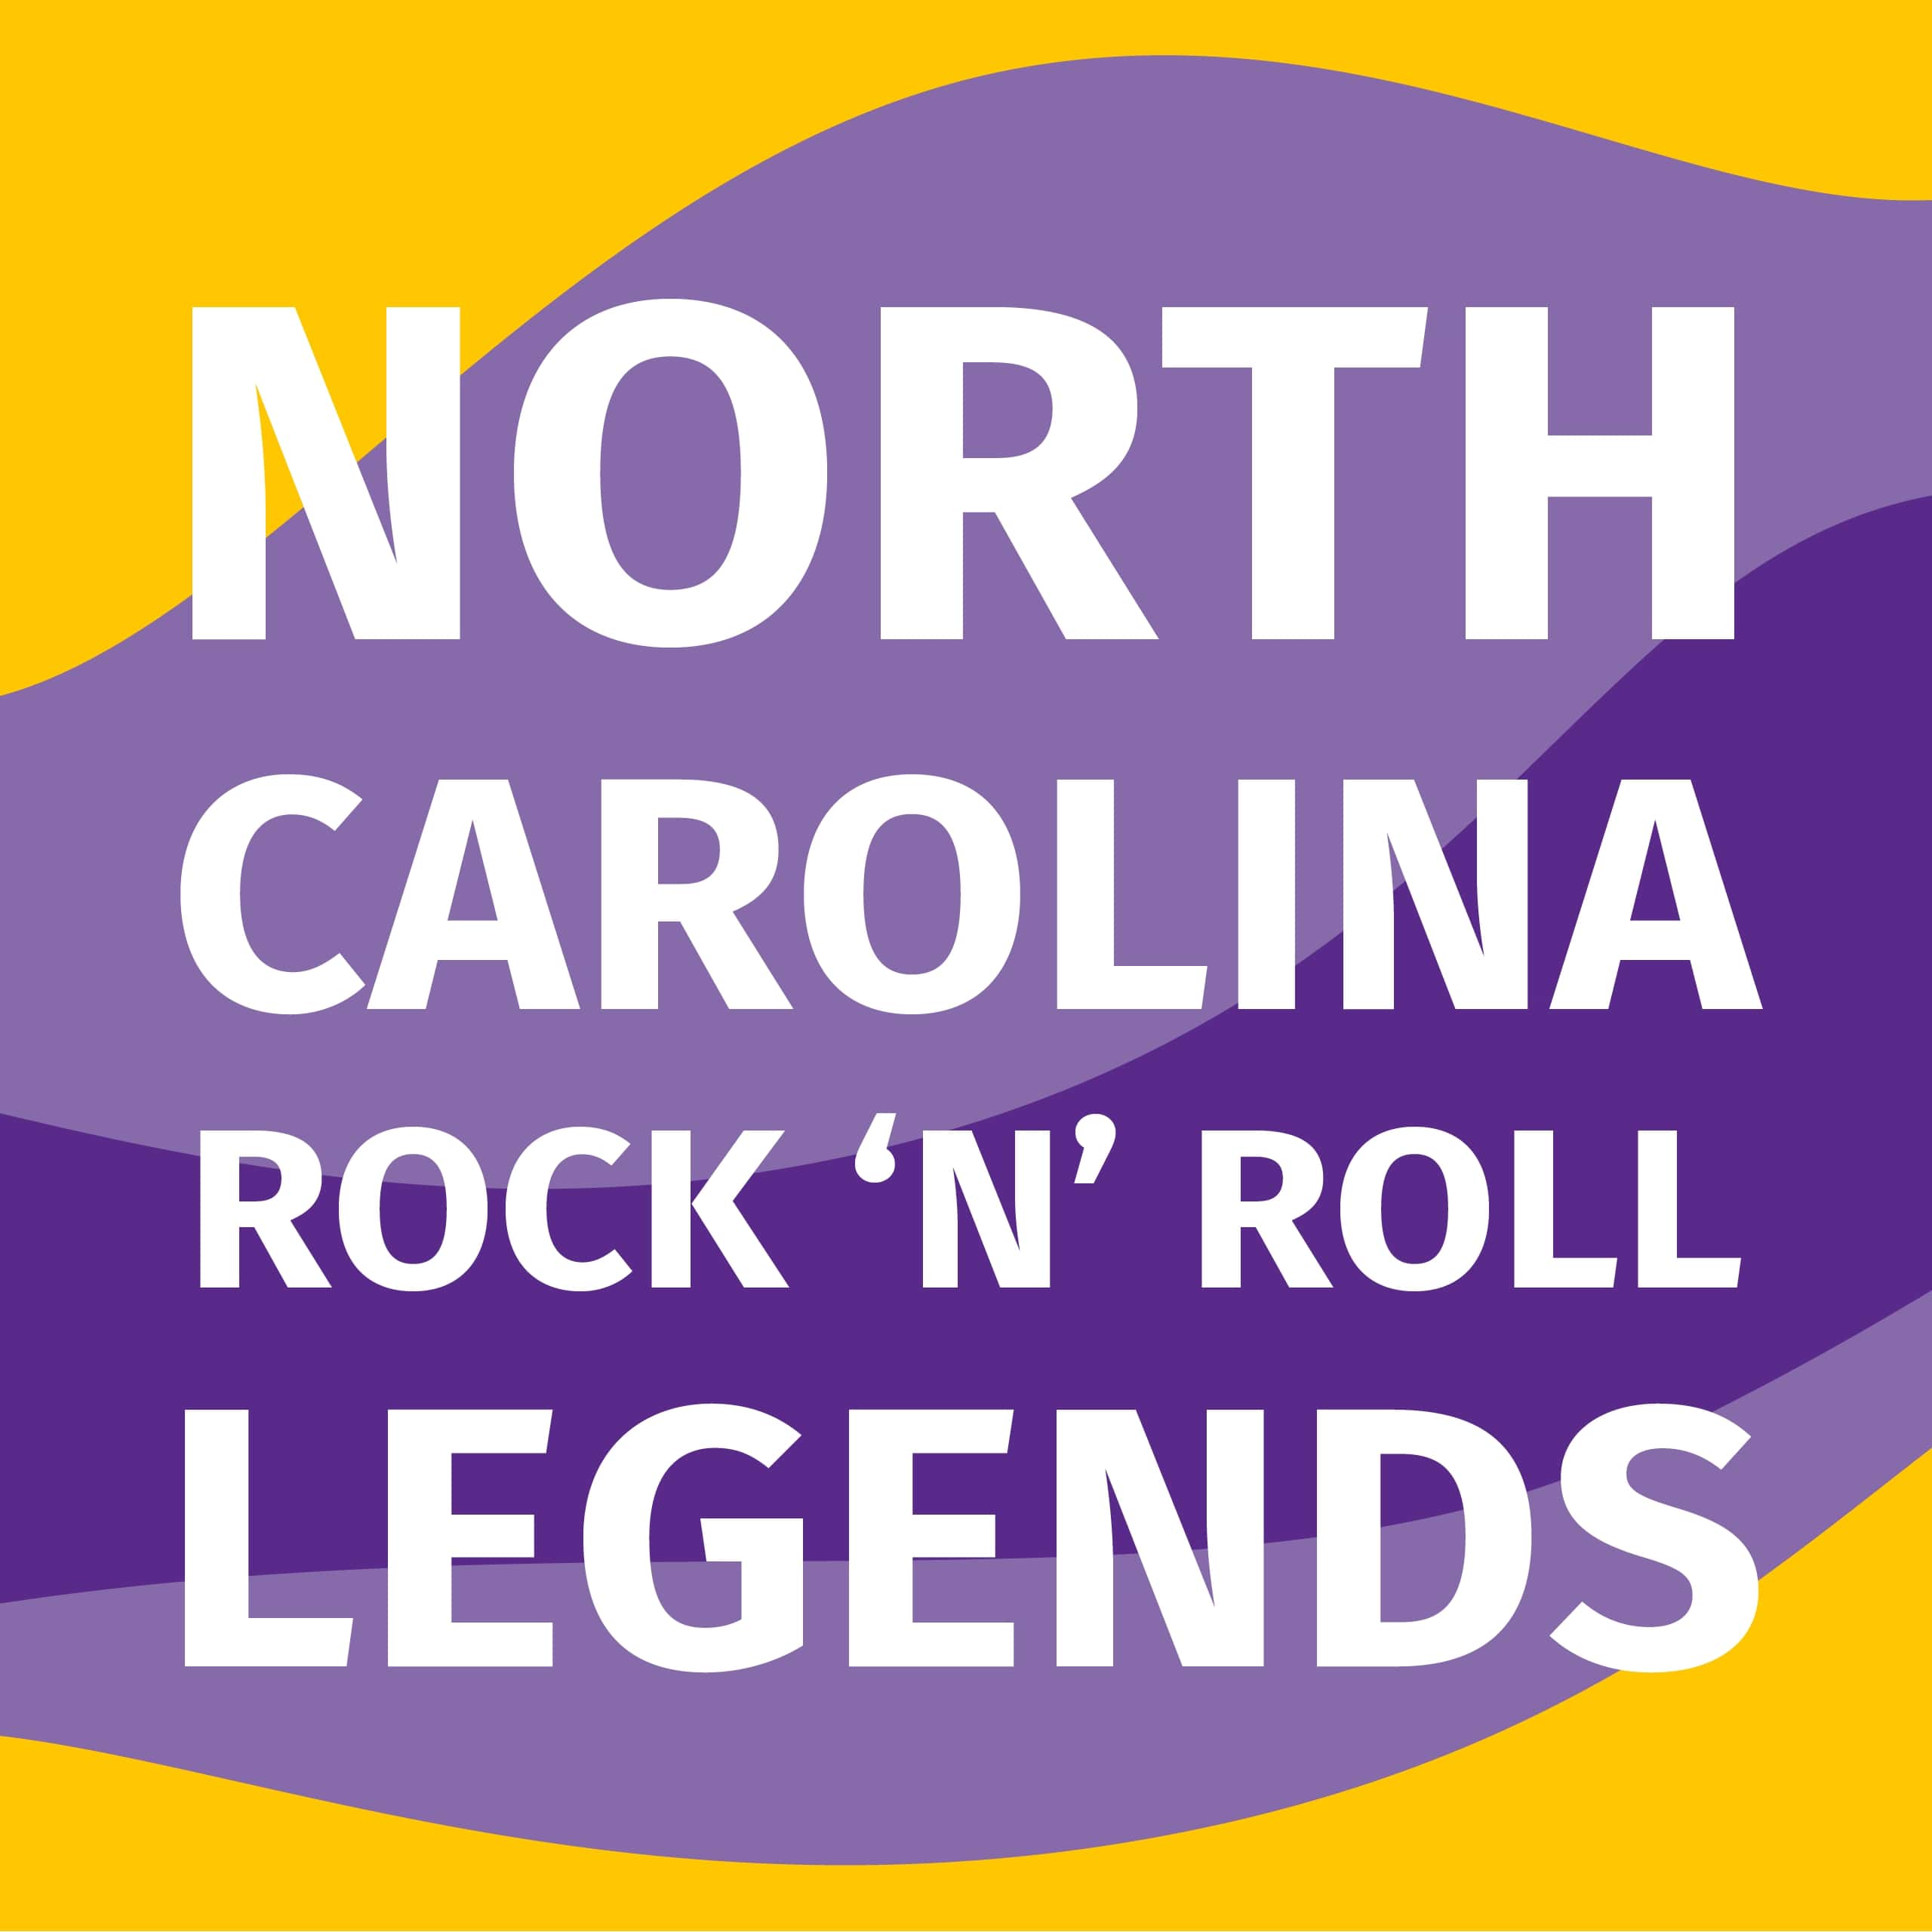 North Carolina Rock 'n' Roll Legends